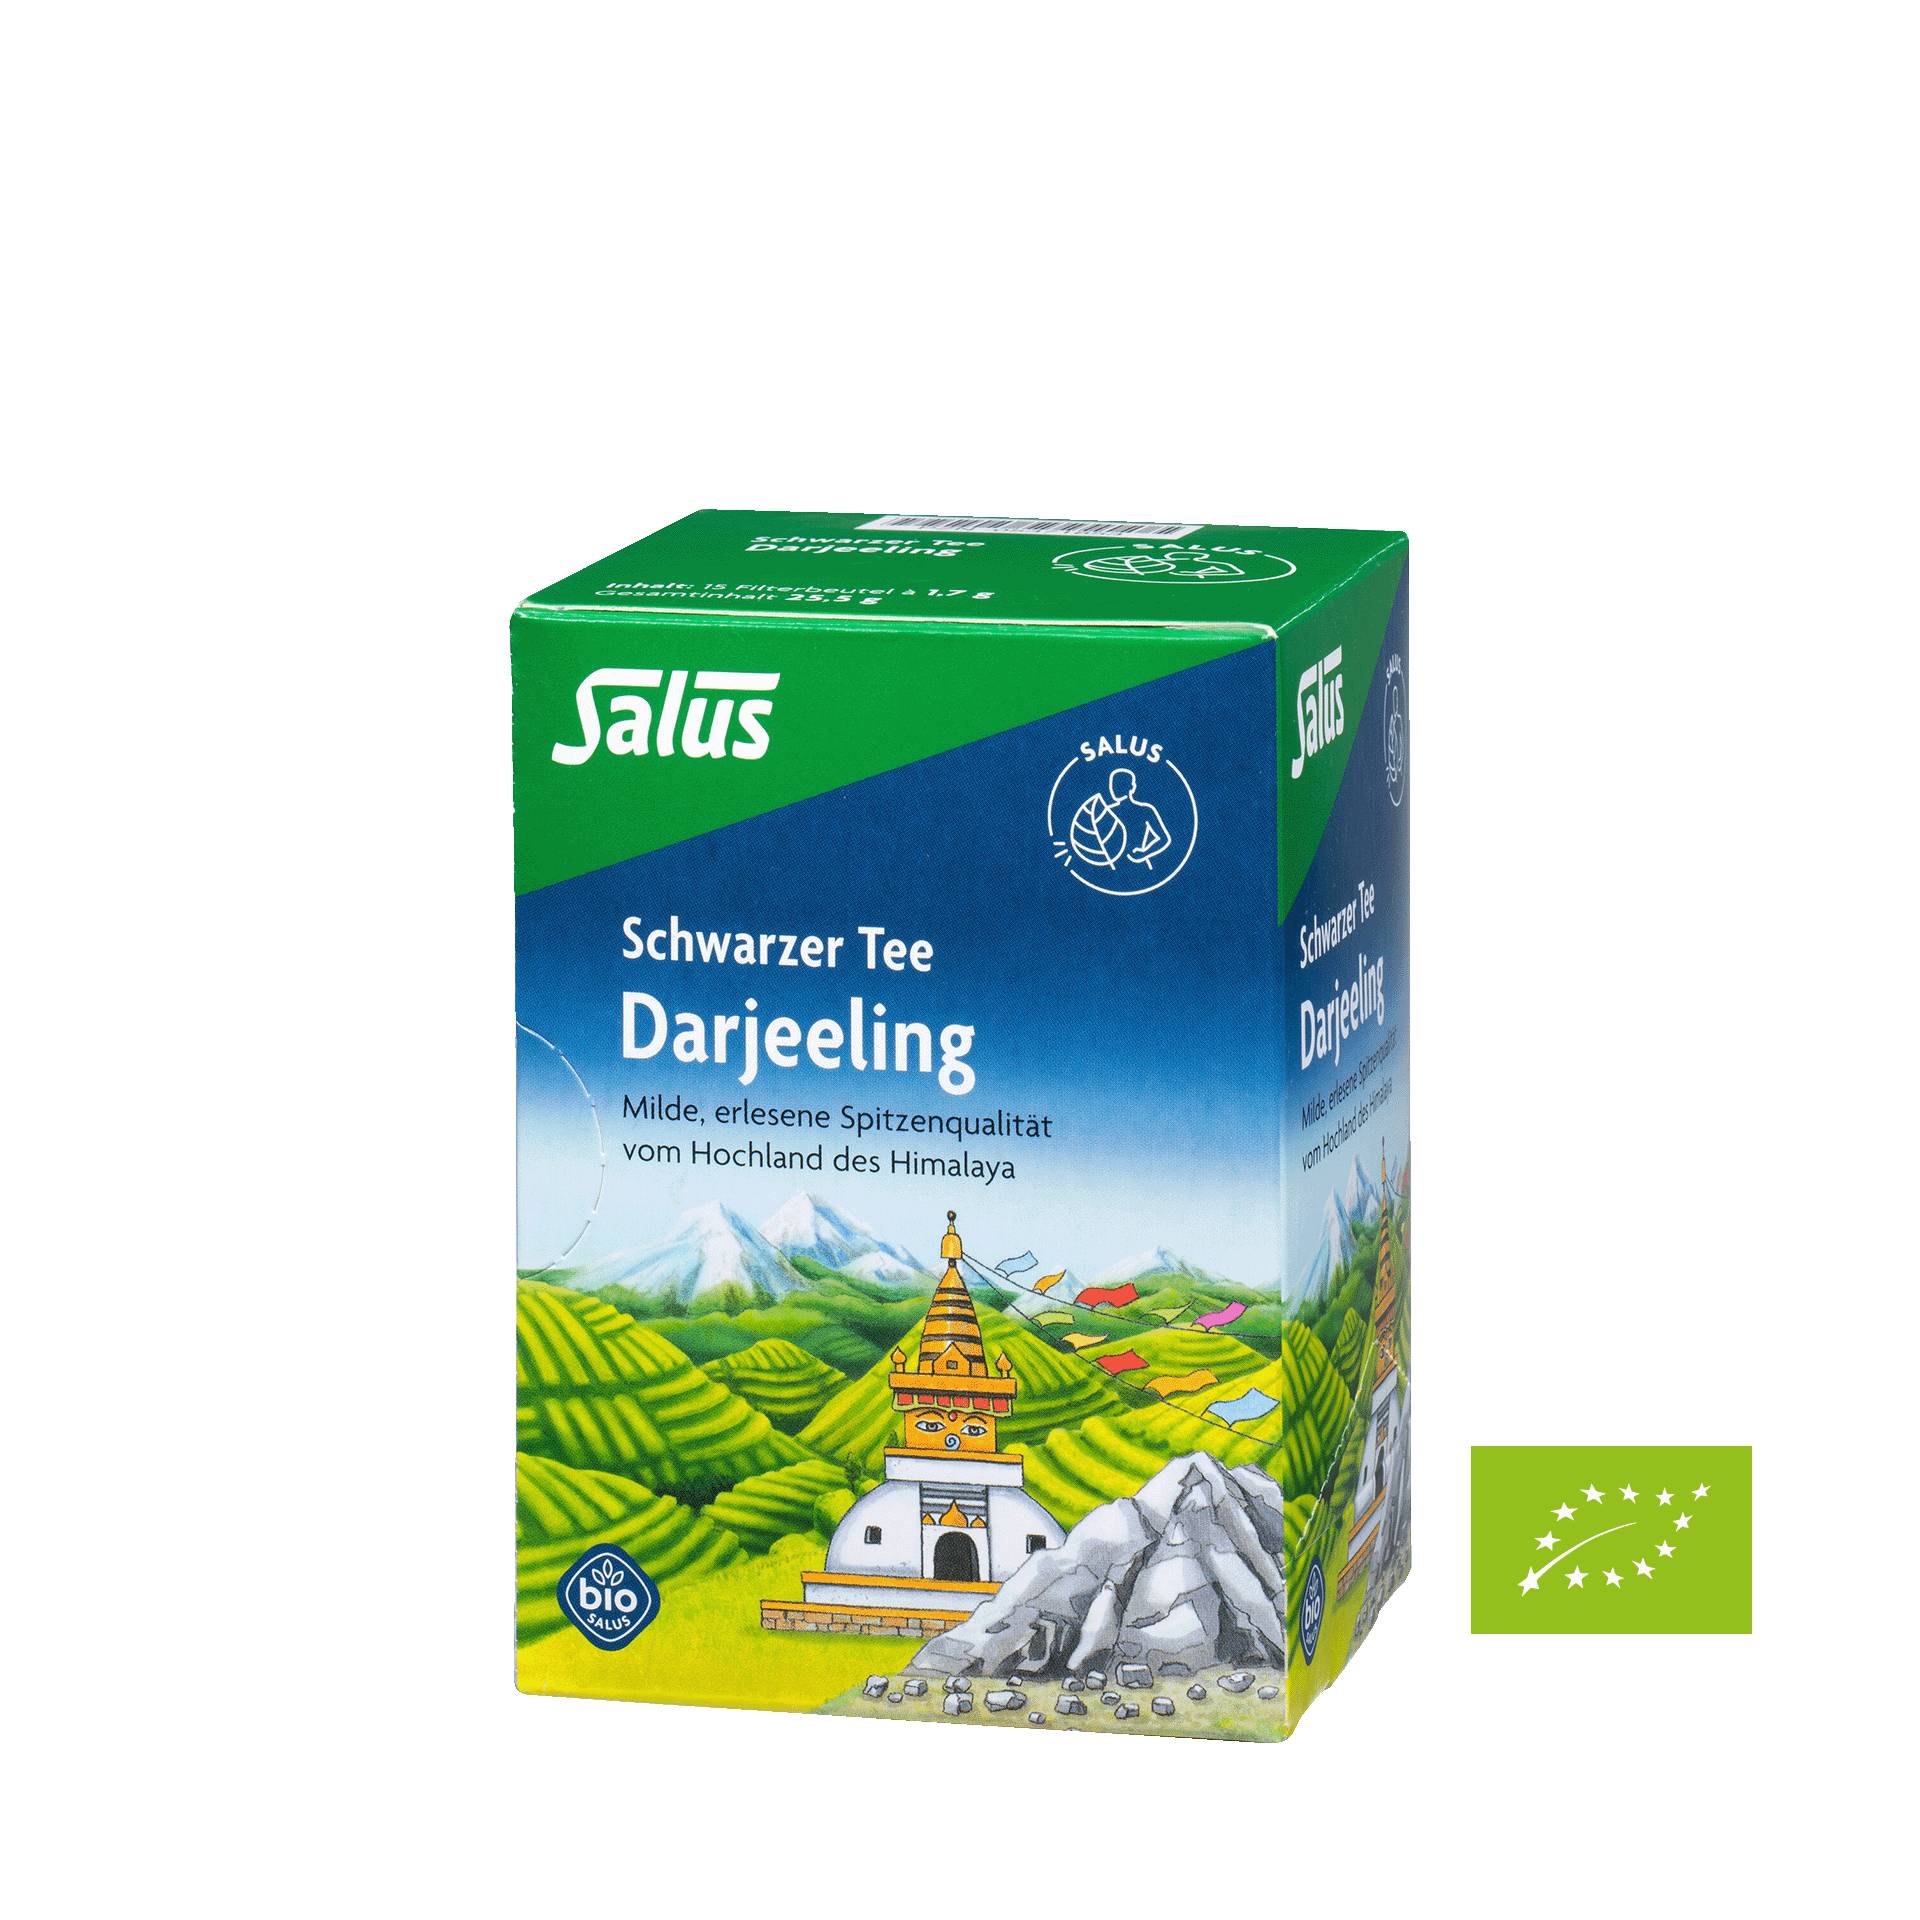 Darjeeling Schwarzer Tee, 15 Filterbeutel von Salus